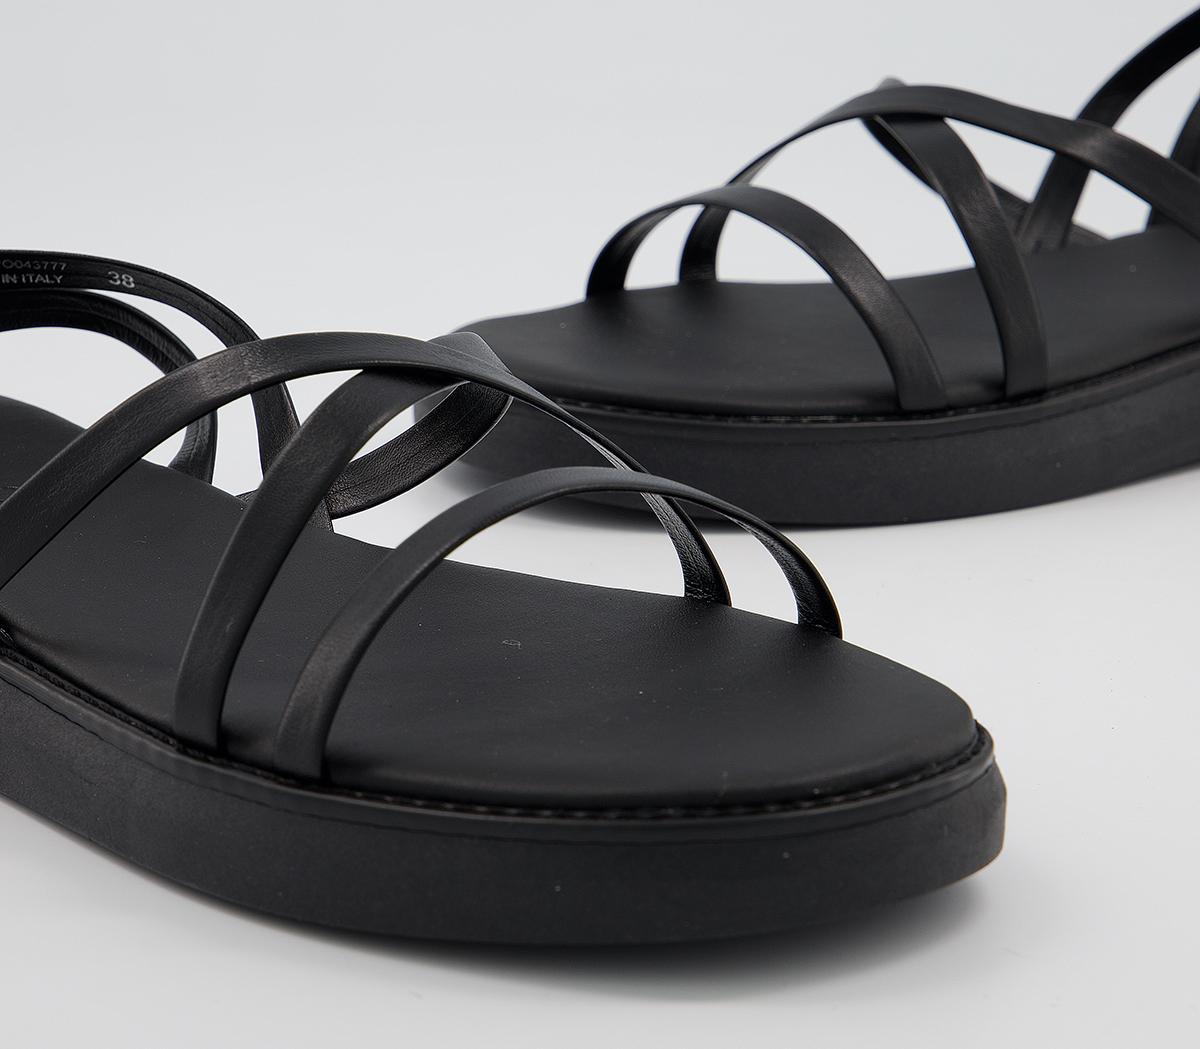 Office Slim Strappy Sandals Black - Women’s Sandals